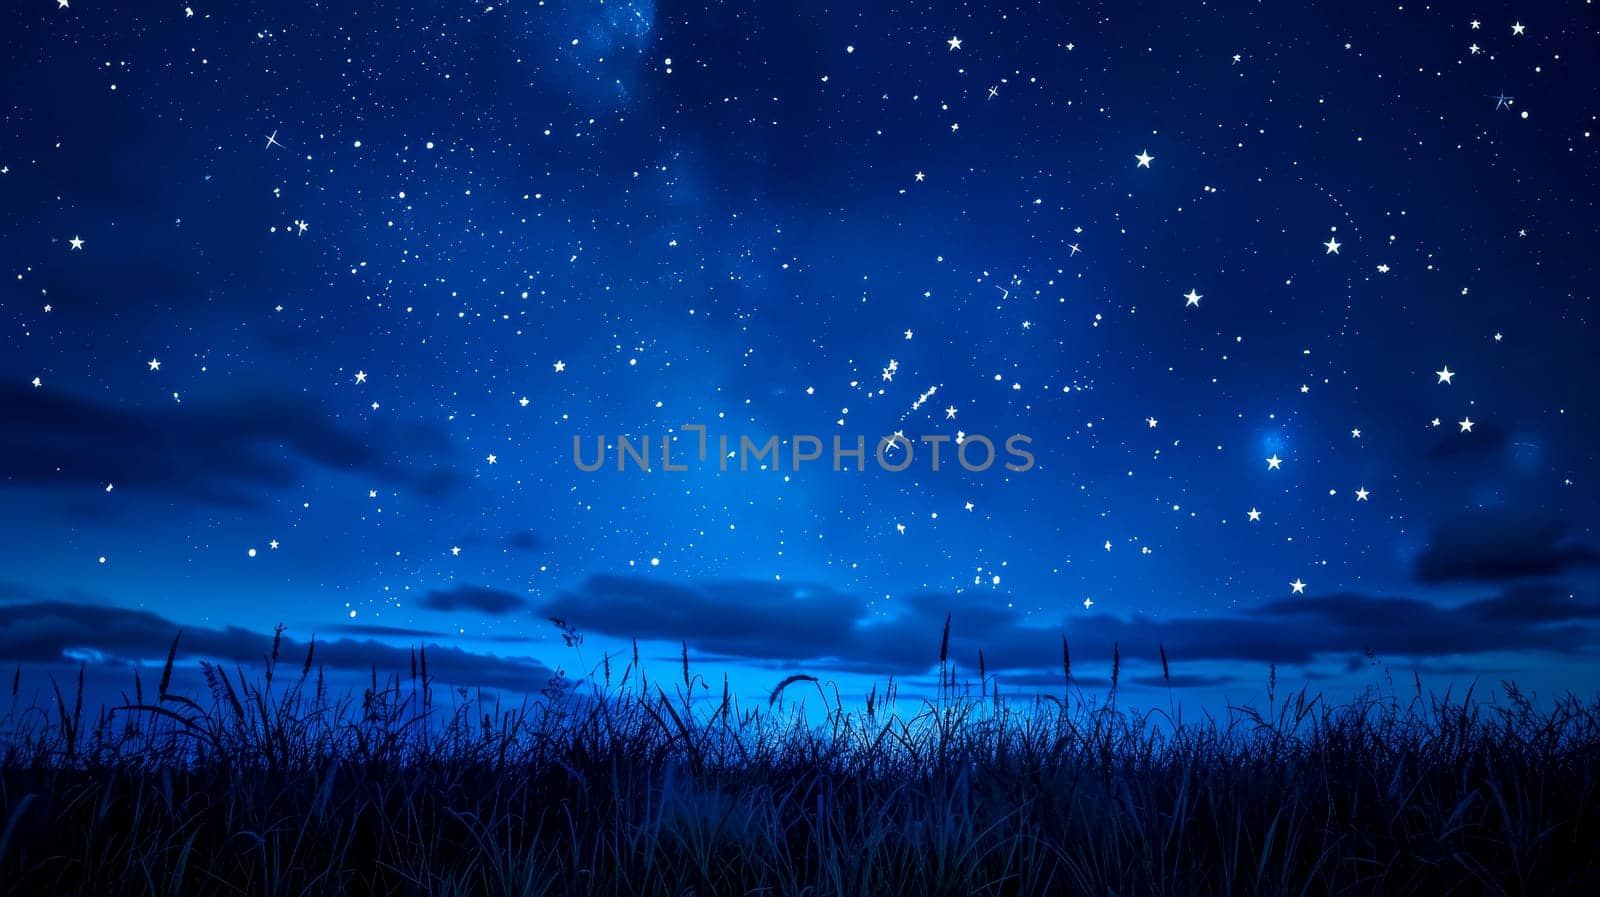 Enchanting starry night sky over grass field by Edophoto